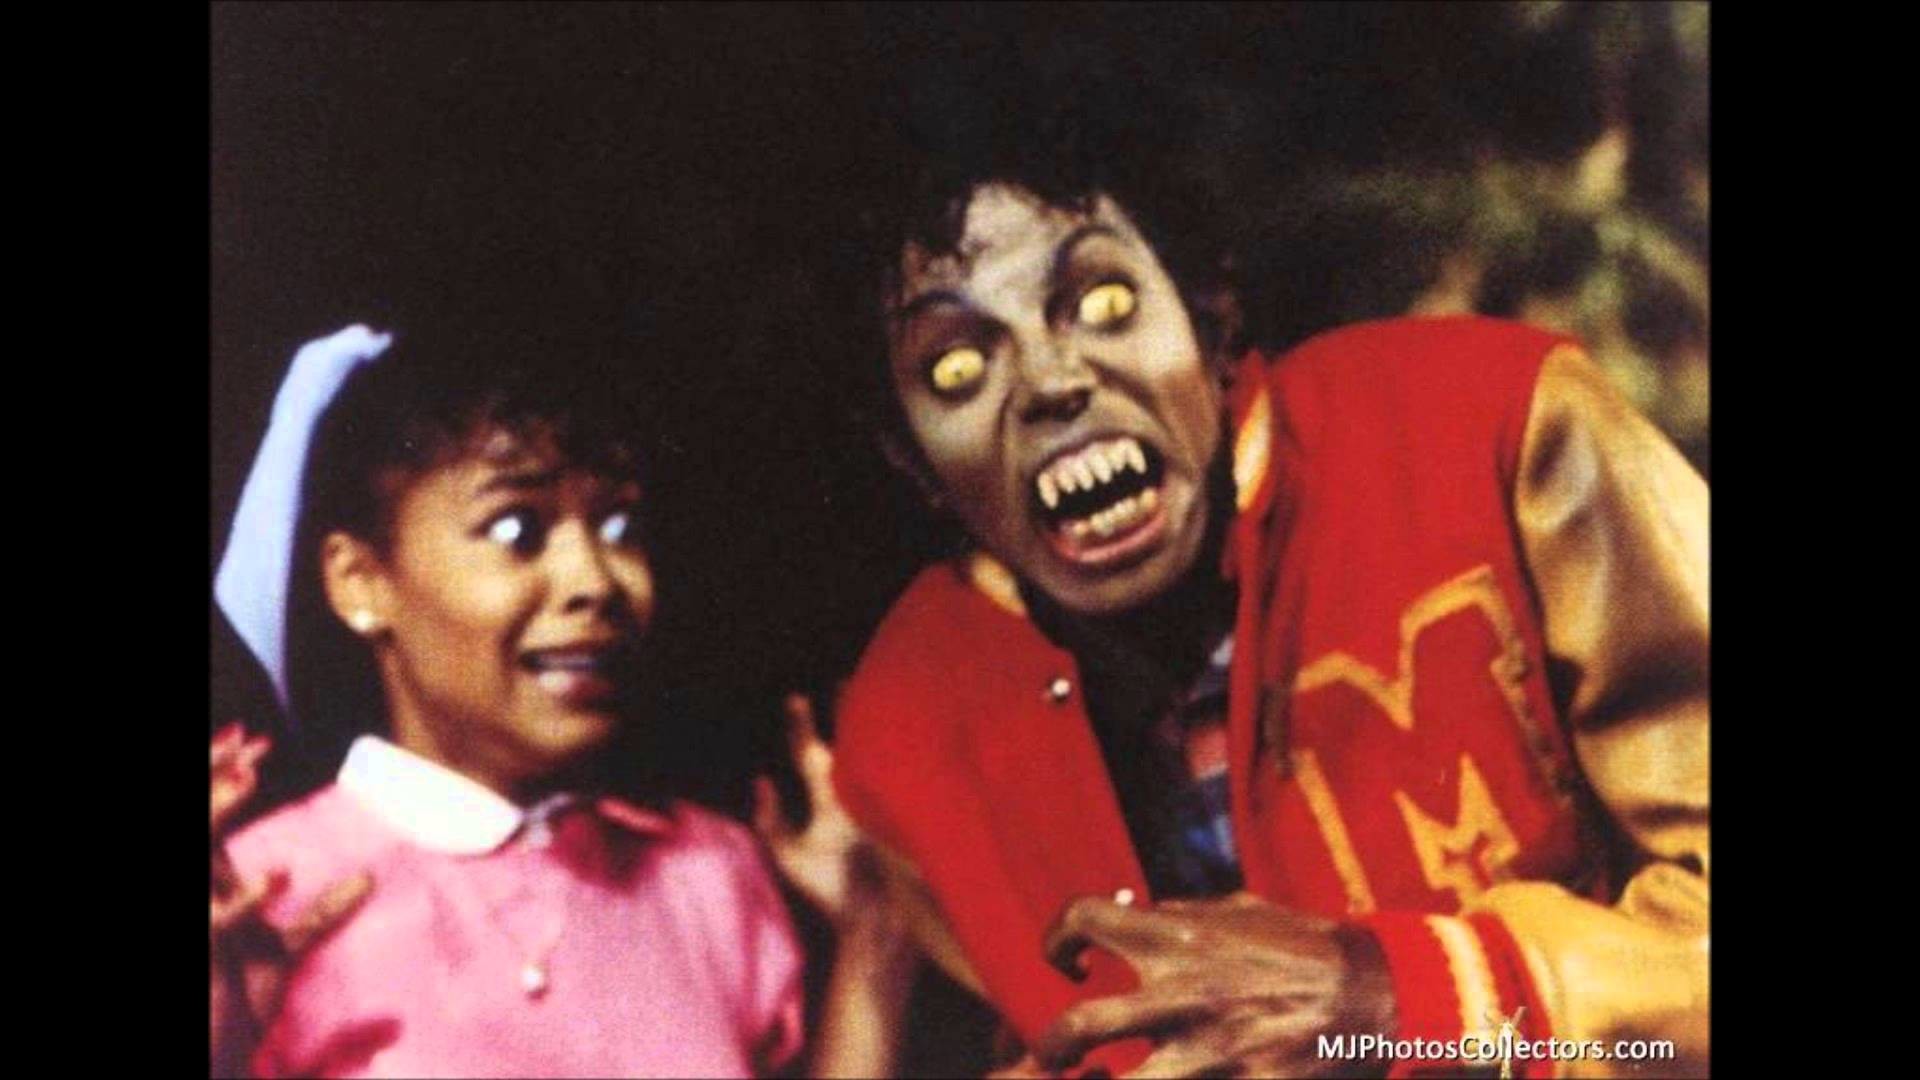 1920x1080 Robert Vadney resurrects Michael Jackson & Vincent Price - The Thriller